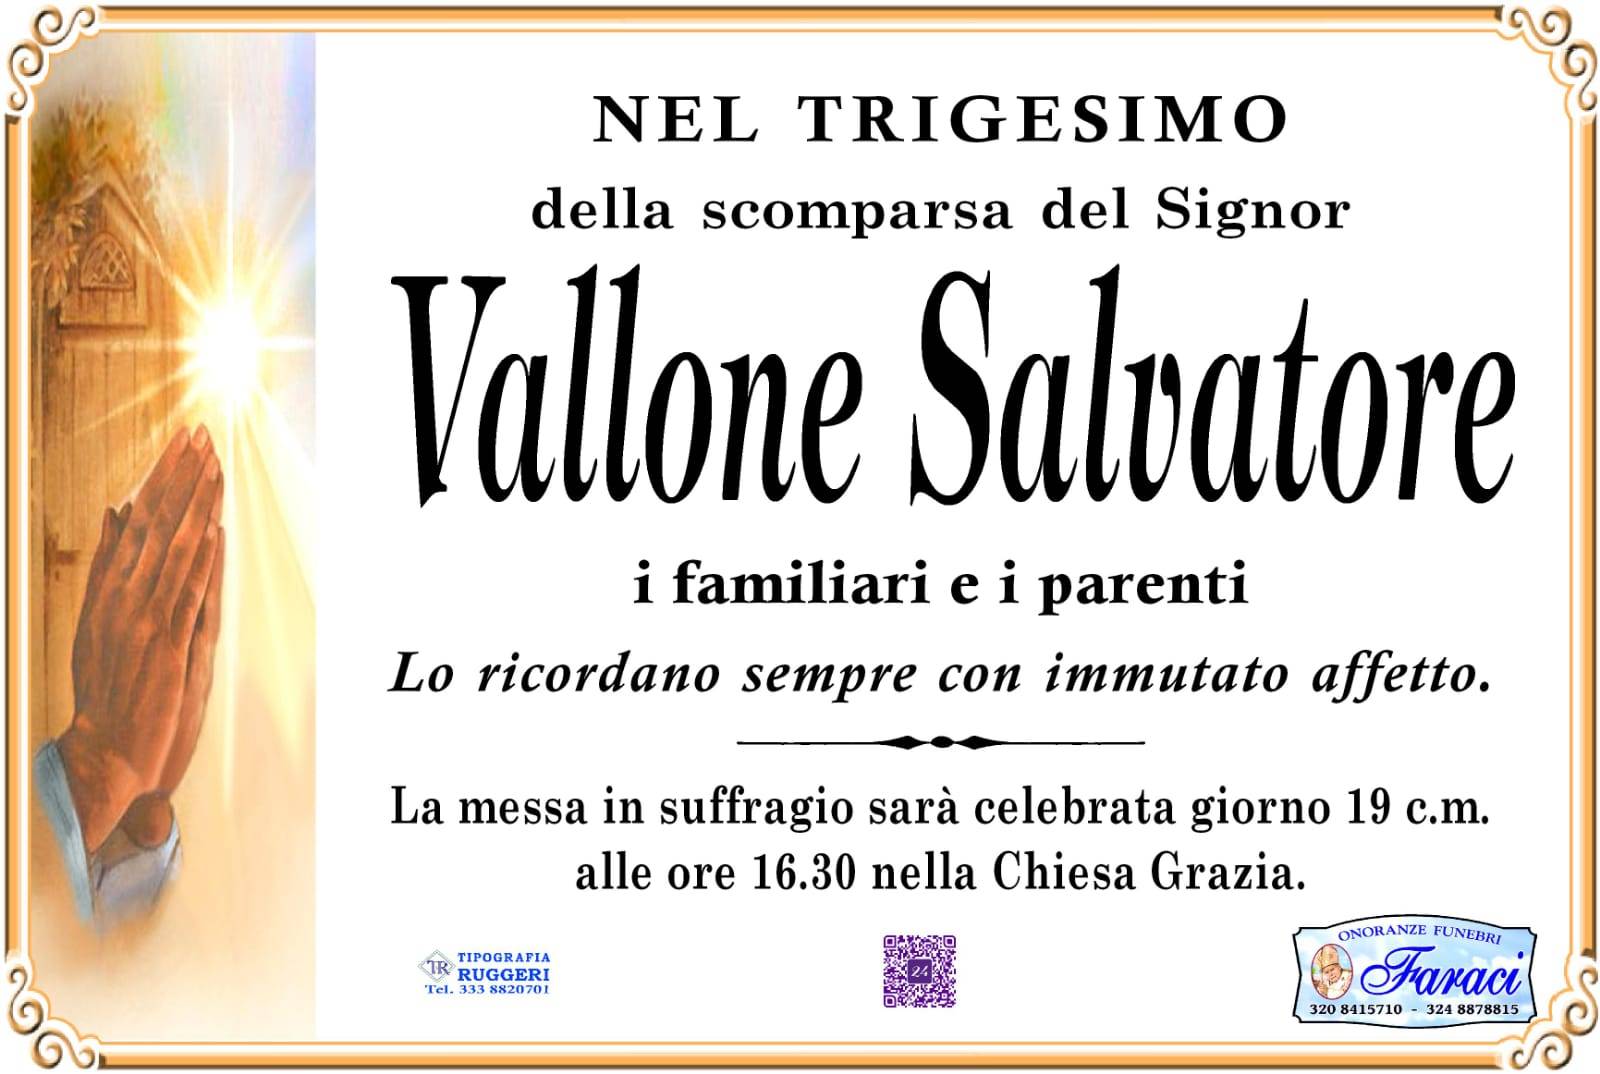 Salvatore Vallone